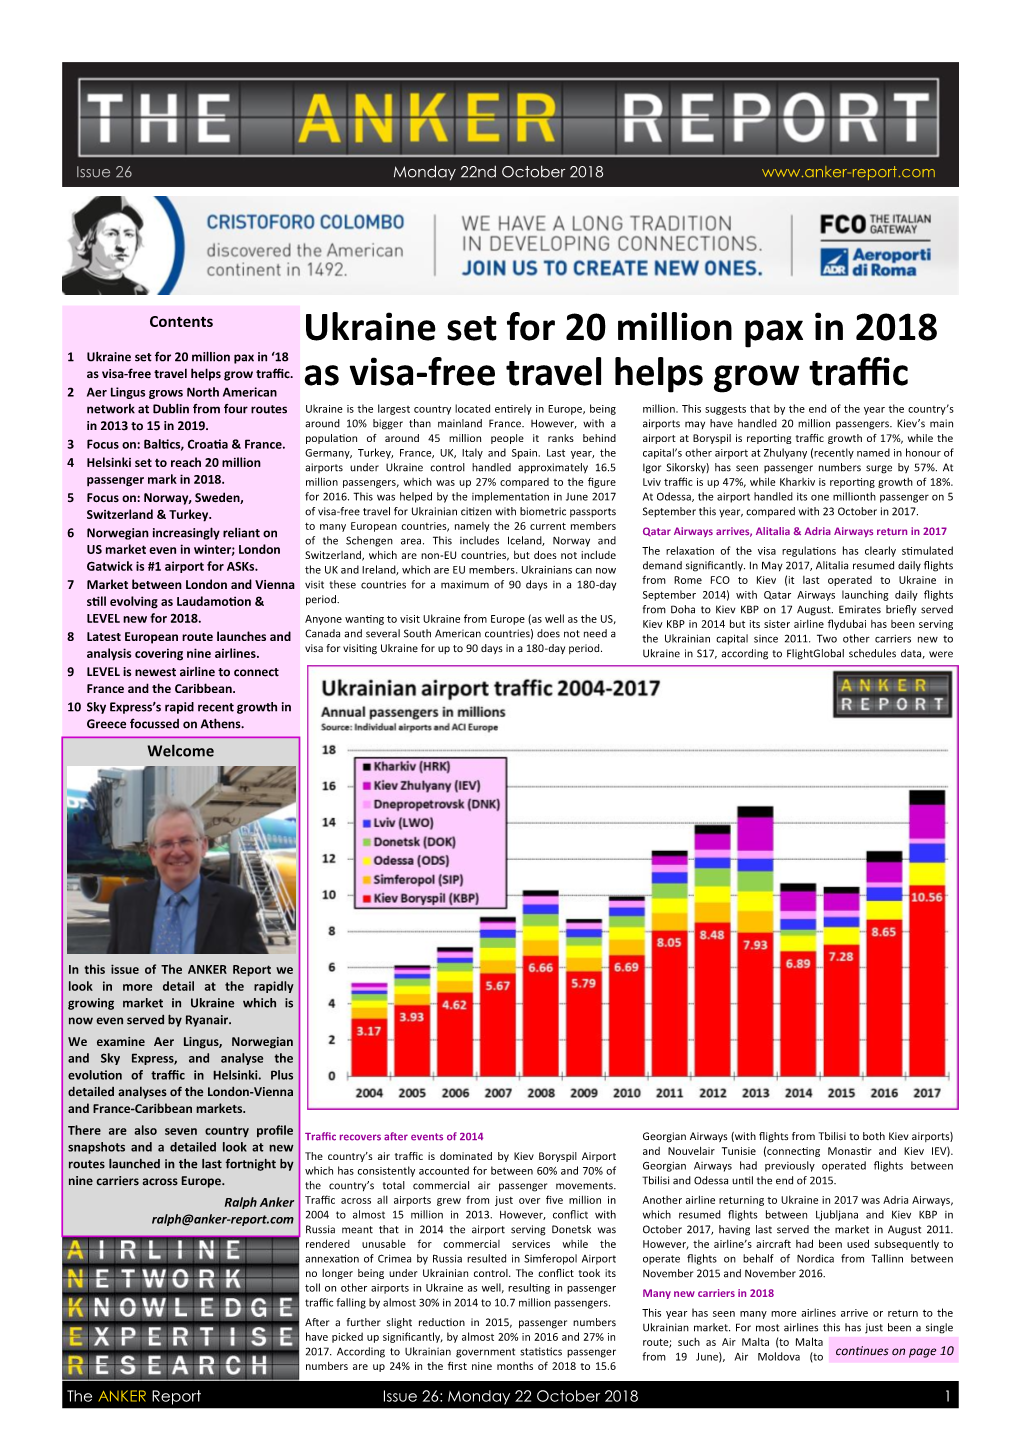 Ukraine Set for 20 Million Pax in 2018 As Visa-Free Travel Helps Grow Traffic